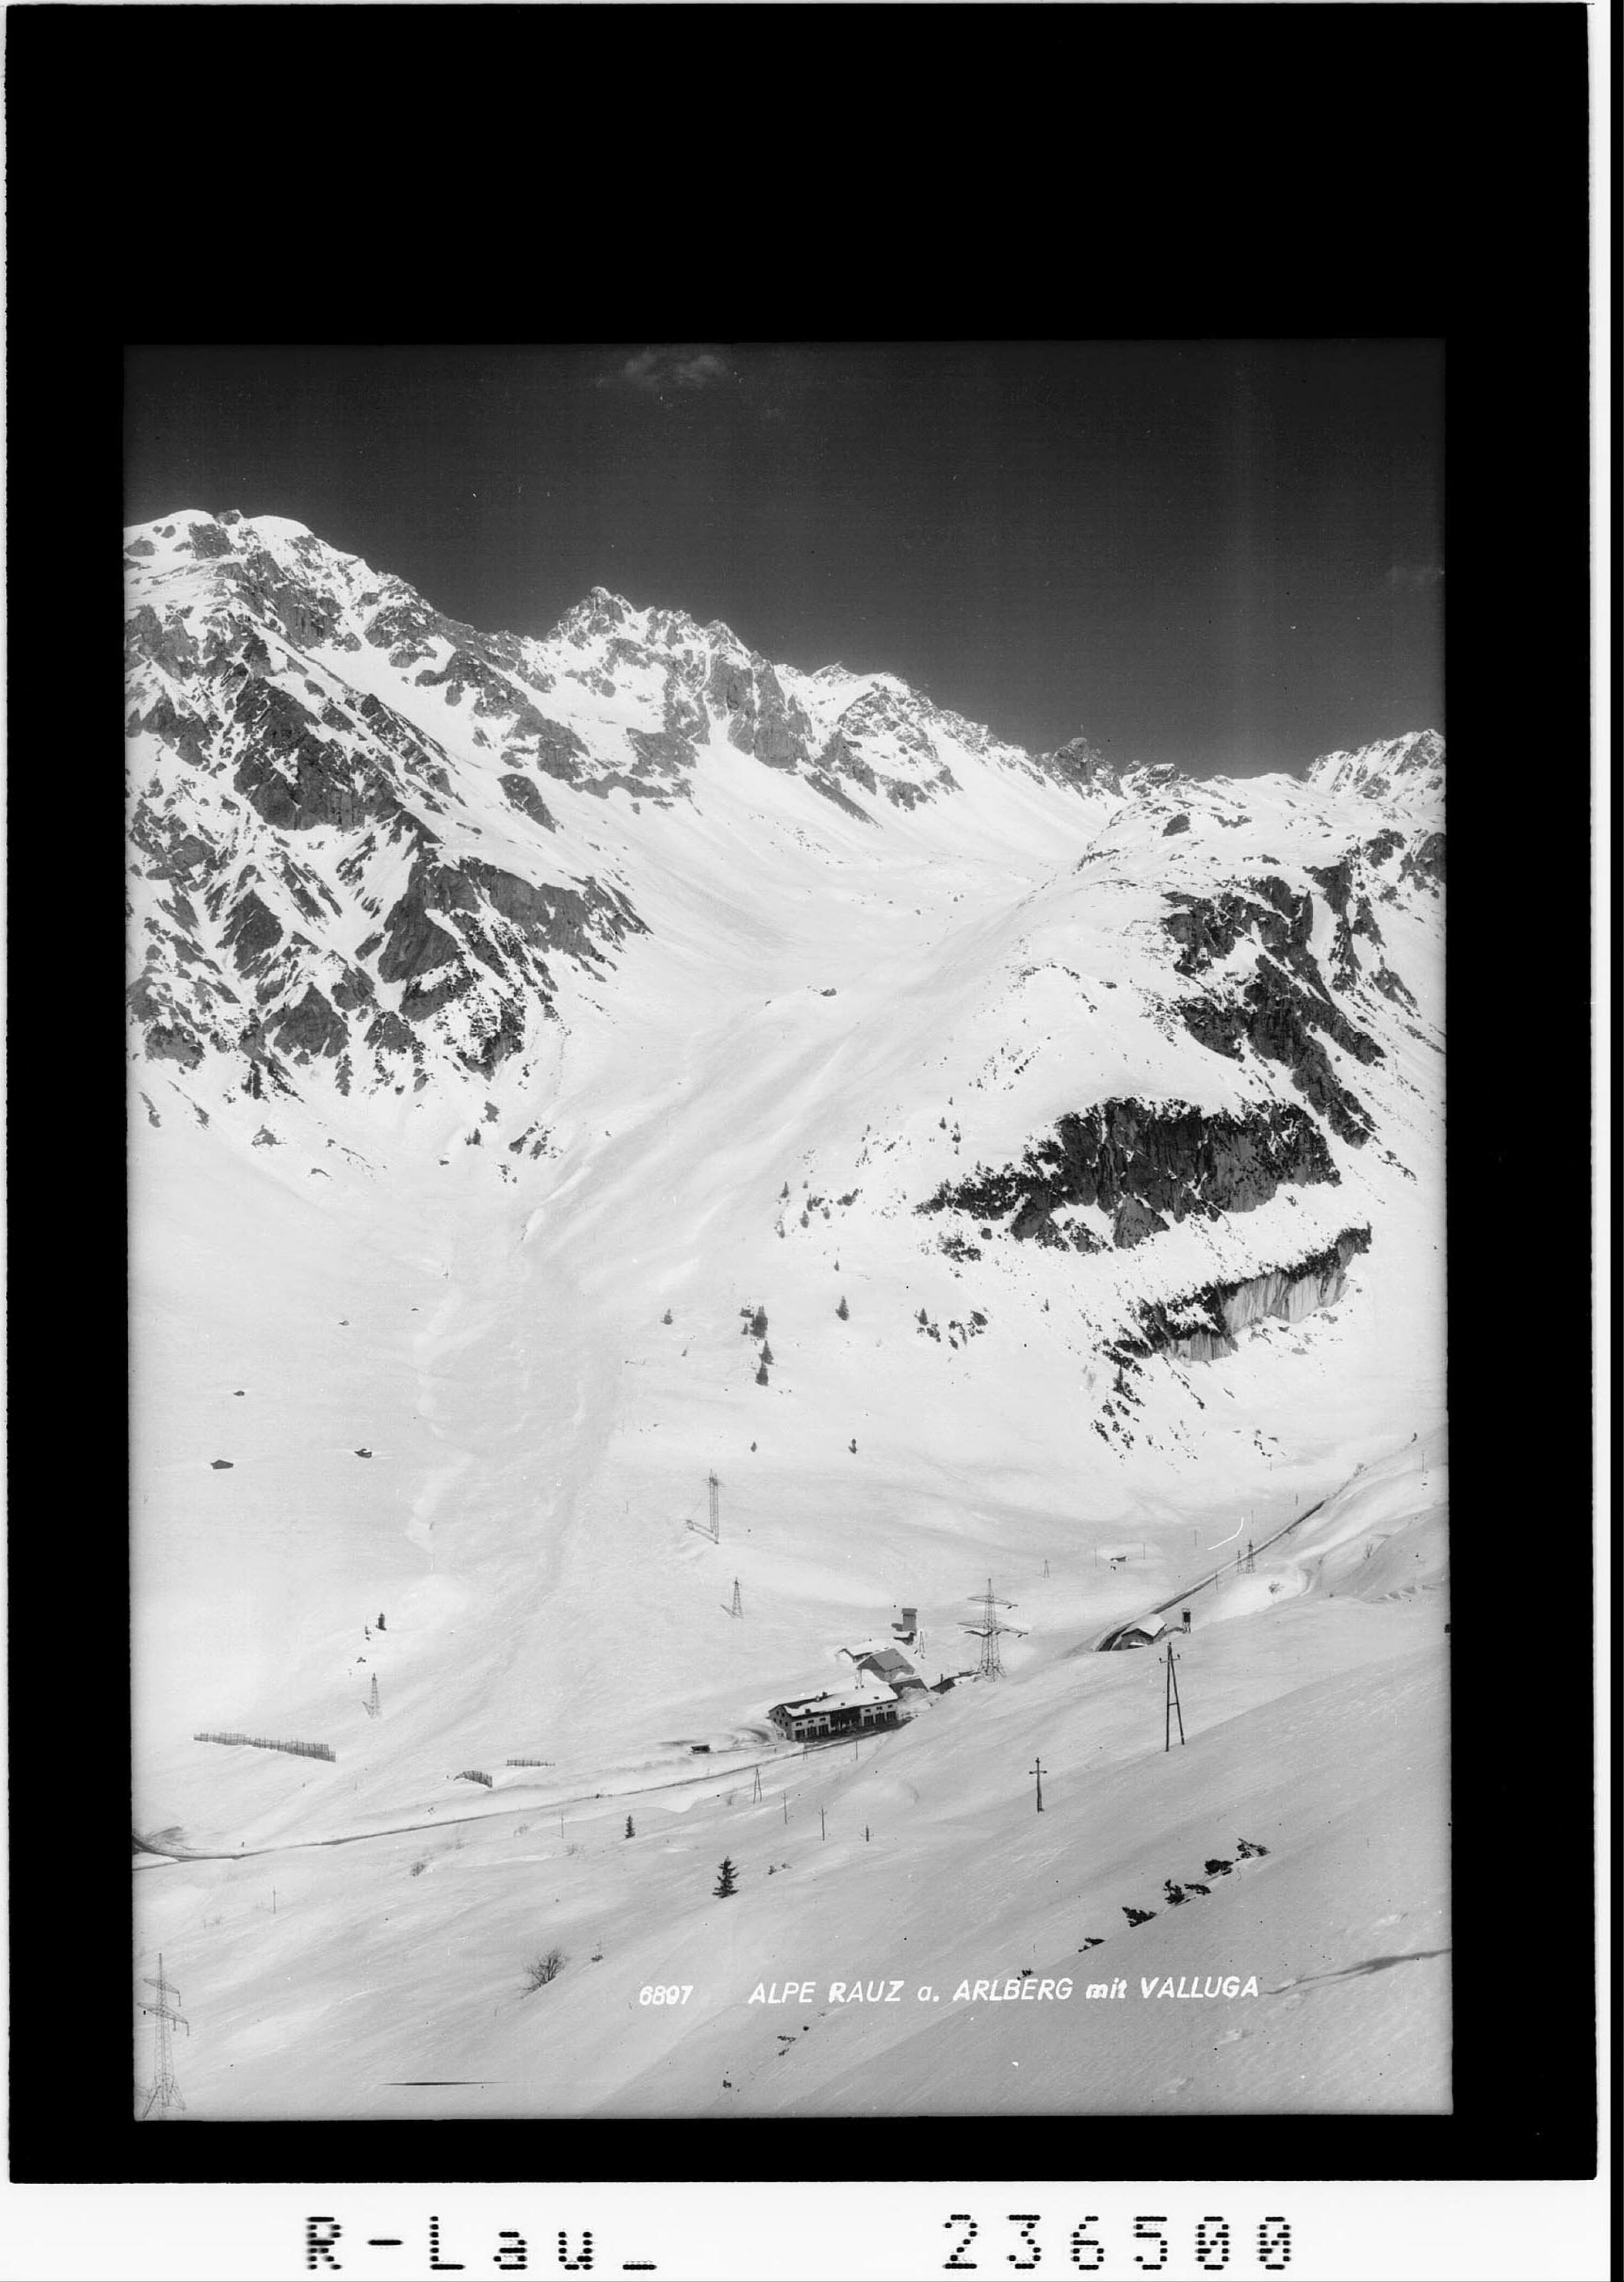 Alpe Rauz am Arlberg mit Valluga></div>


    <hr>
    <div class=